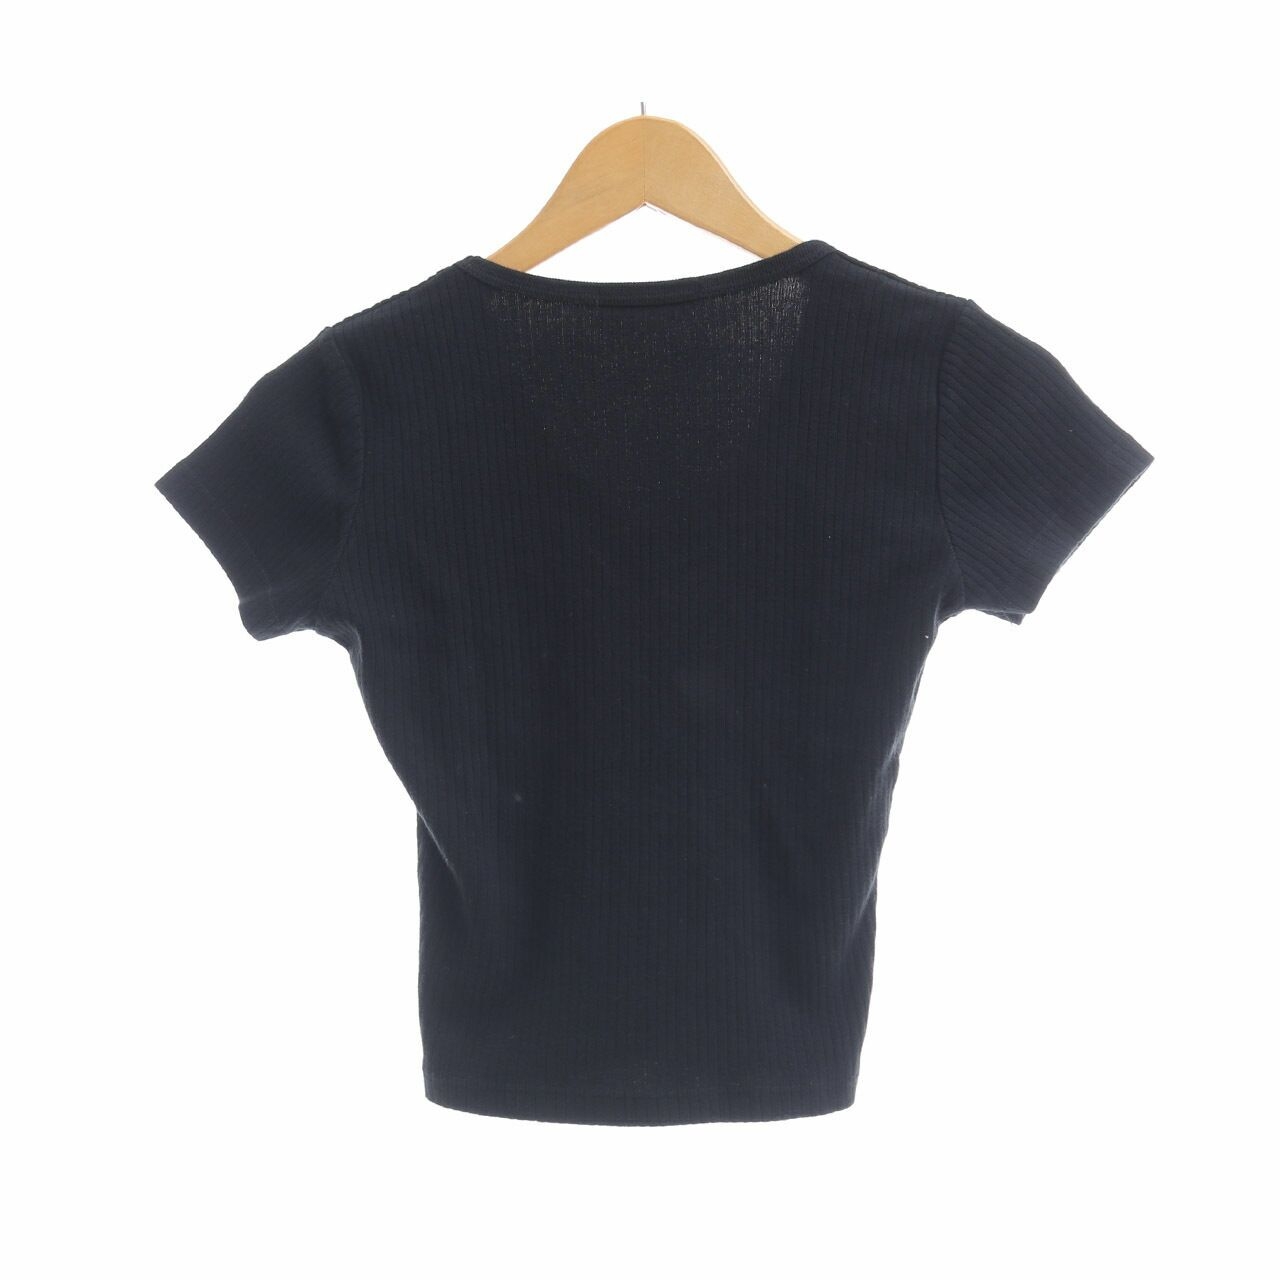 Brandy Melville Black Cropped T-Shirt